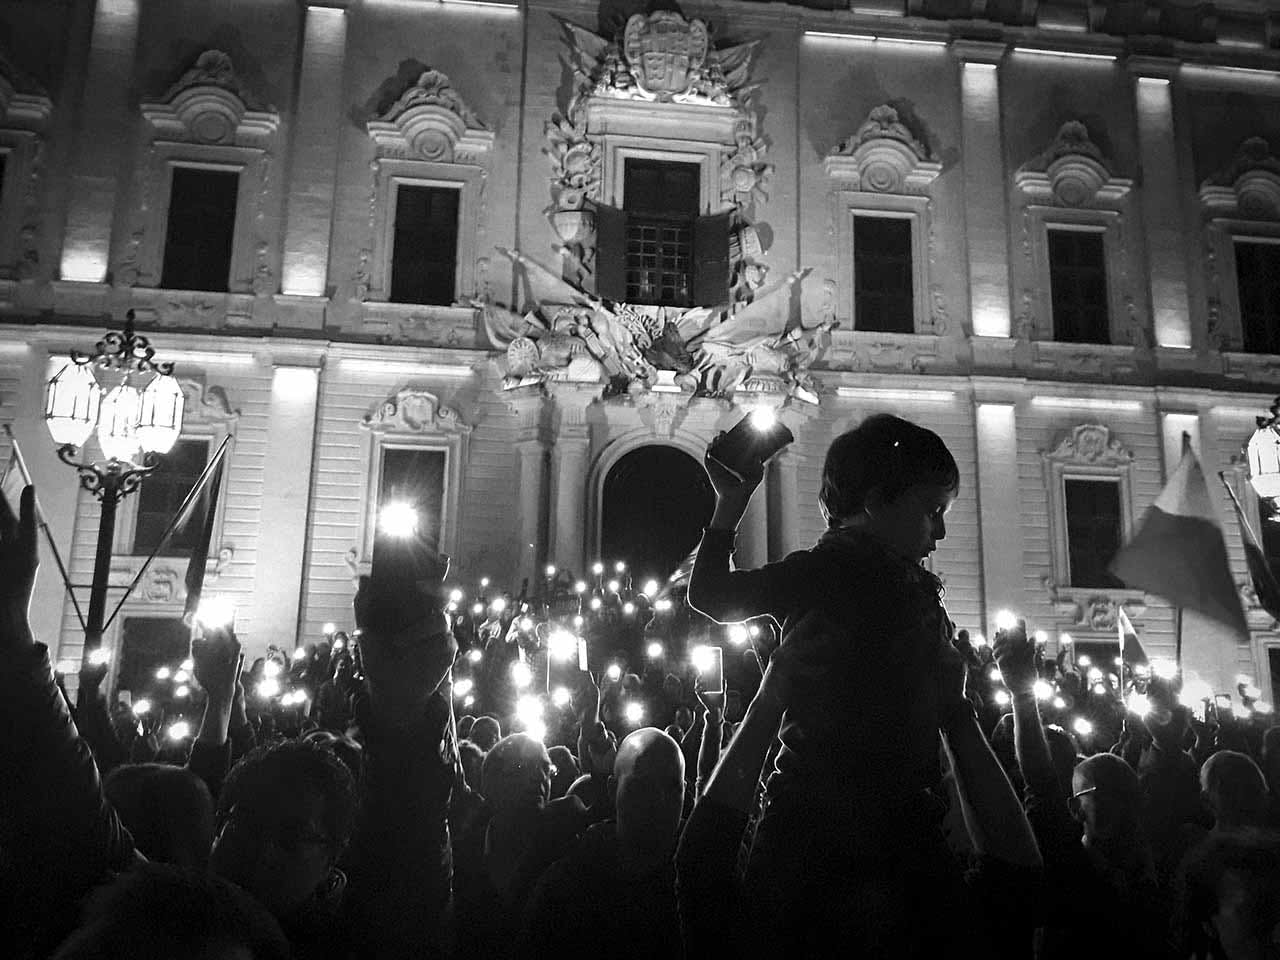 SABAR: The Malta Protests